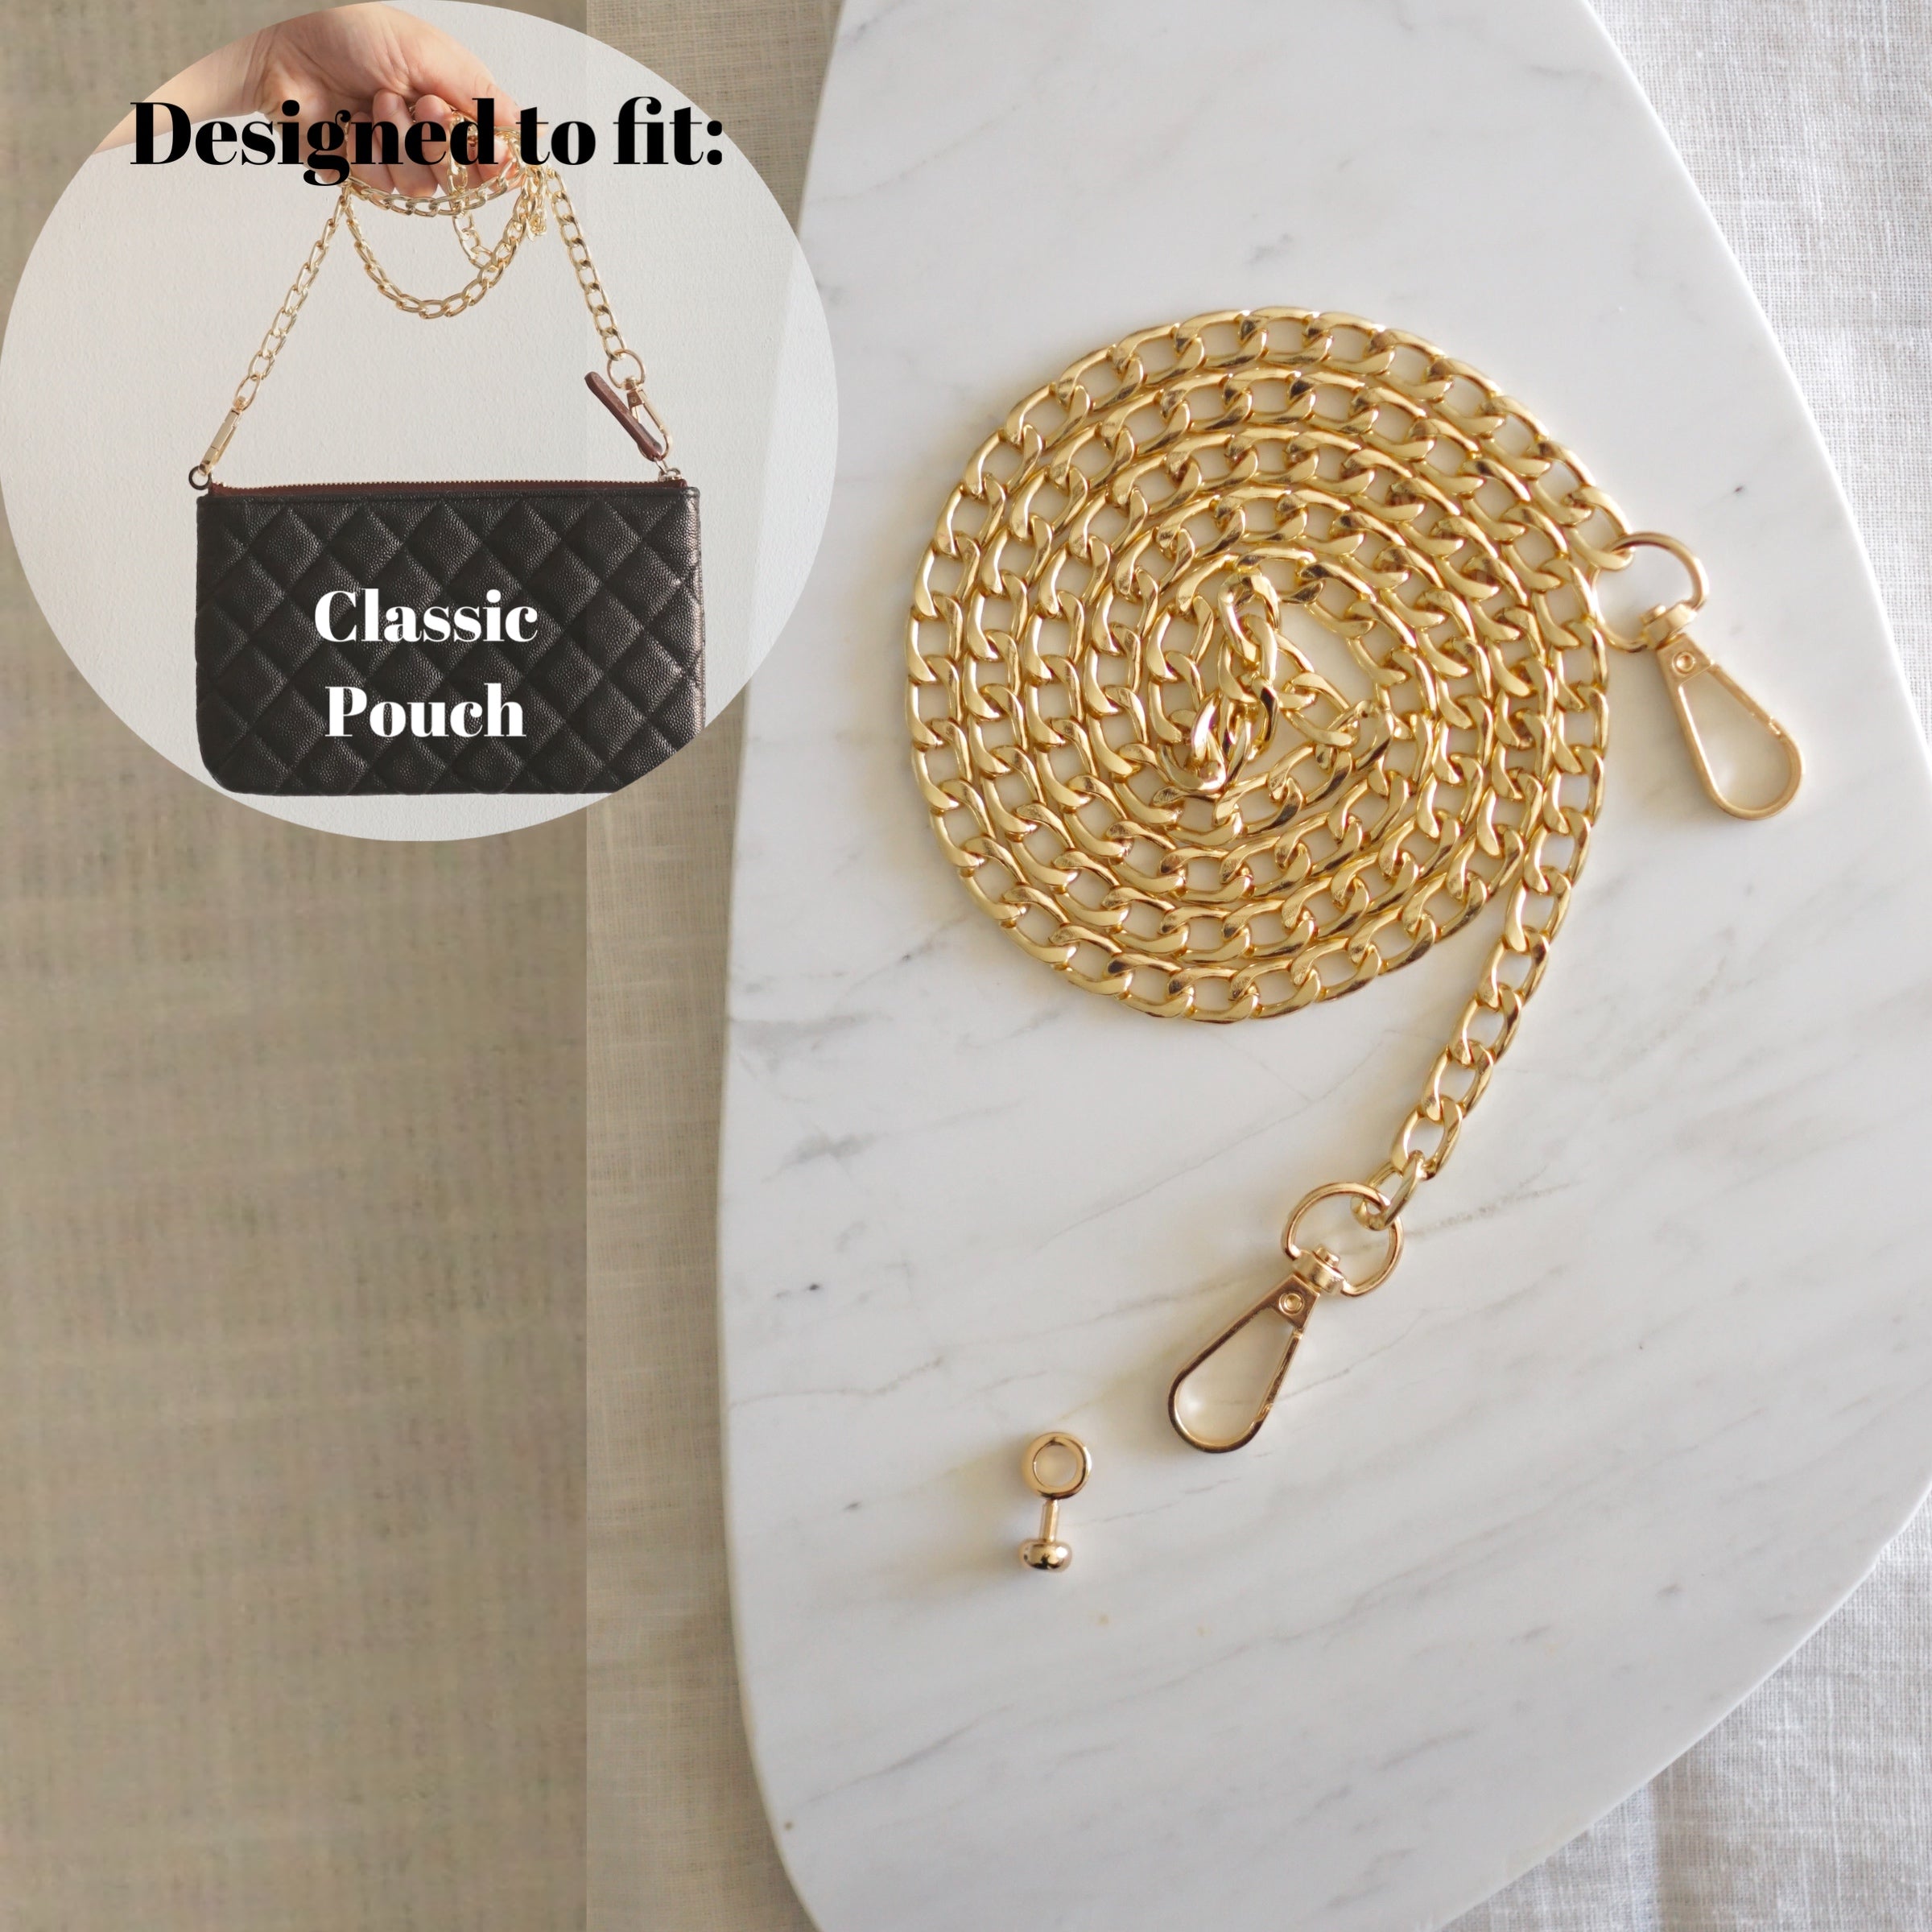 Chanel 19 Pouch Wristlet Conversion : r/chanel